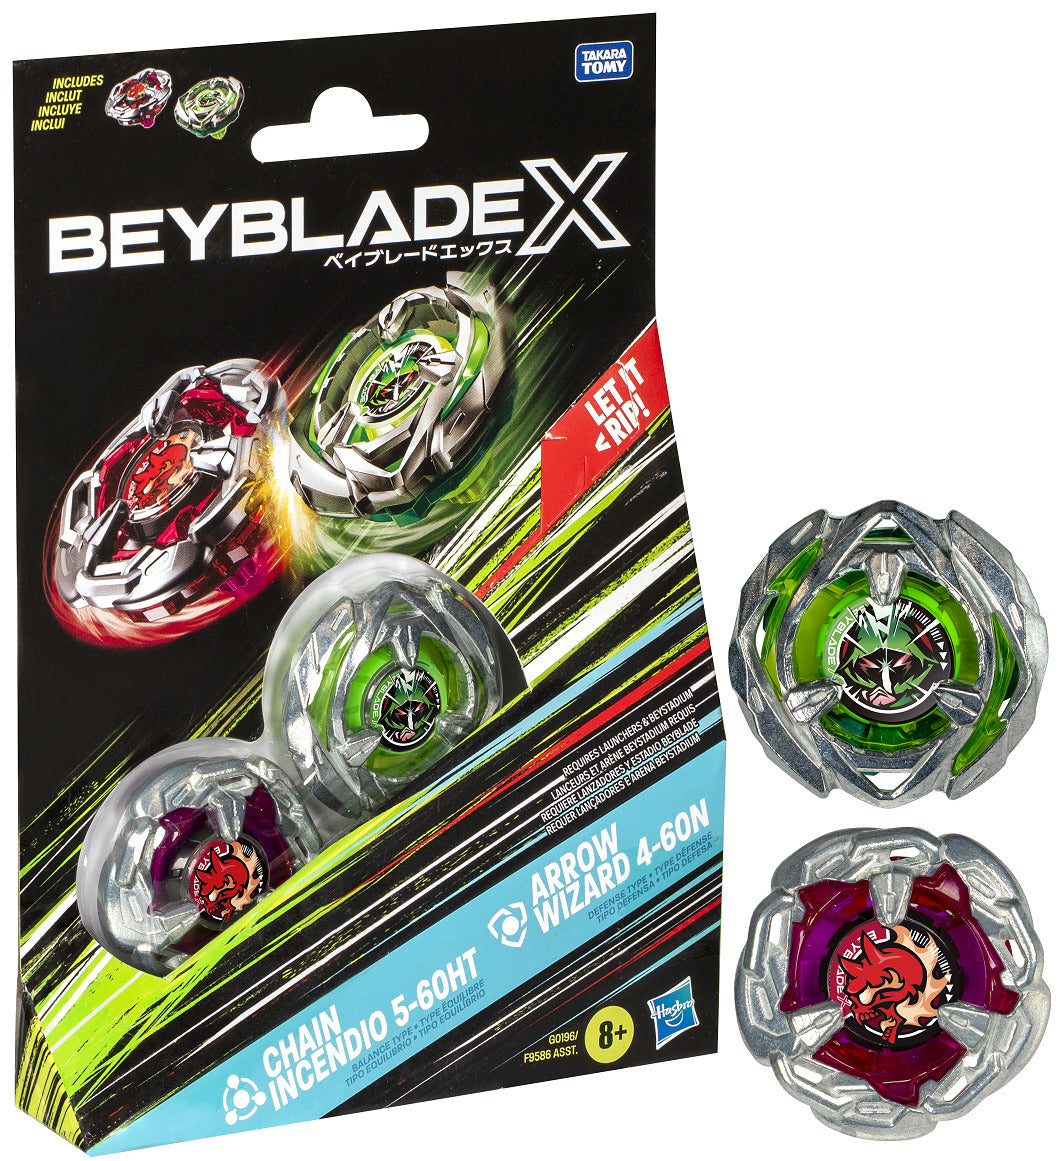 Beyblade X Dual Pack: Chain Incendio 5-60HT & Arrow Wizard 4-60N